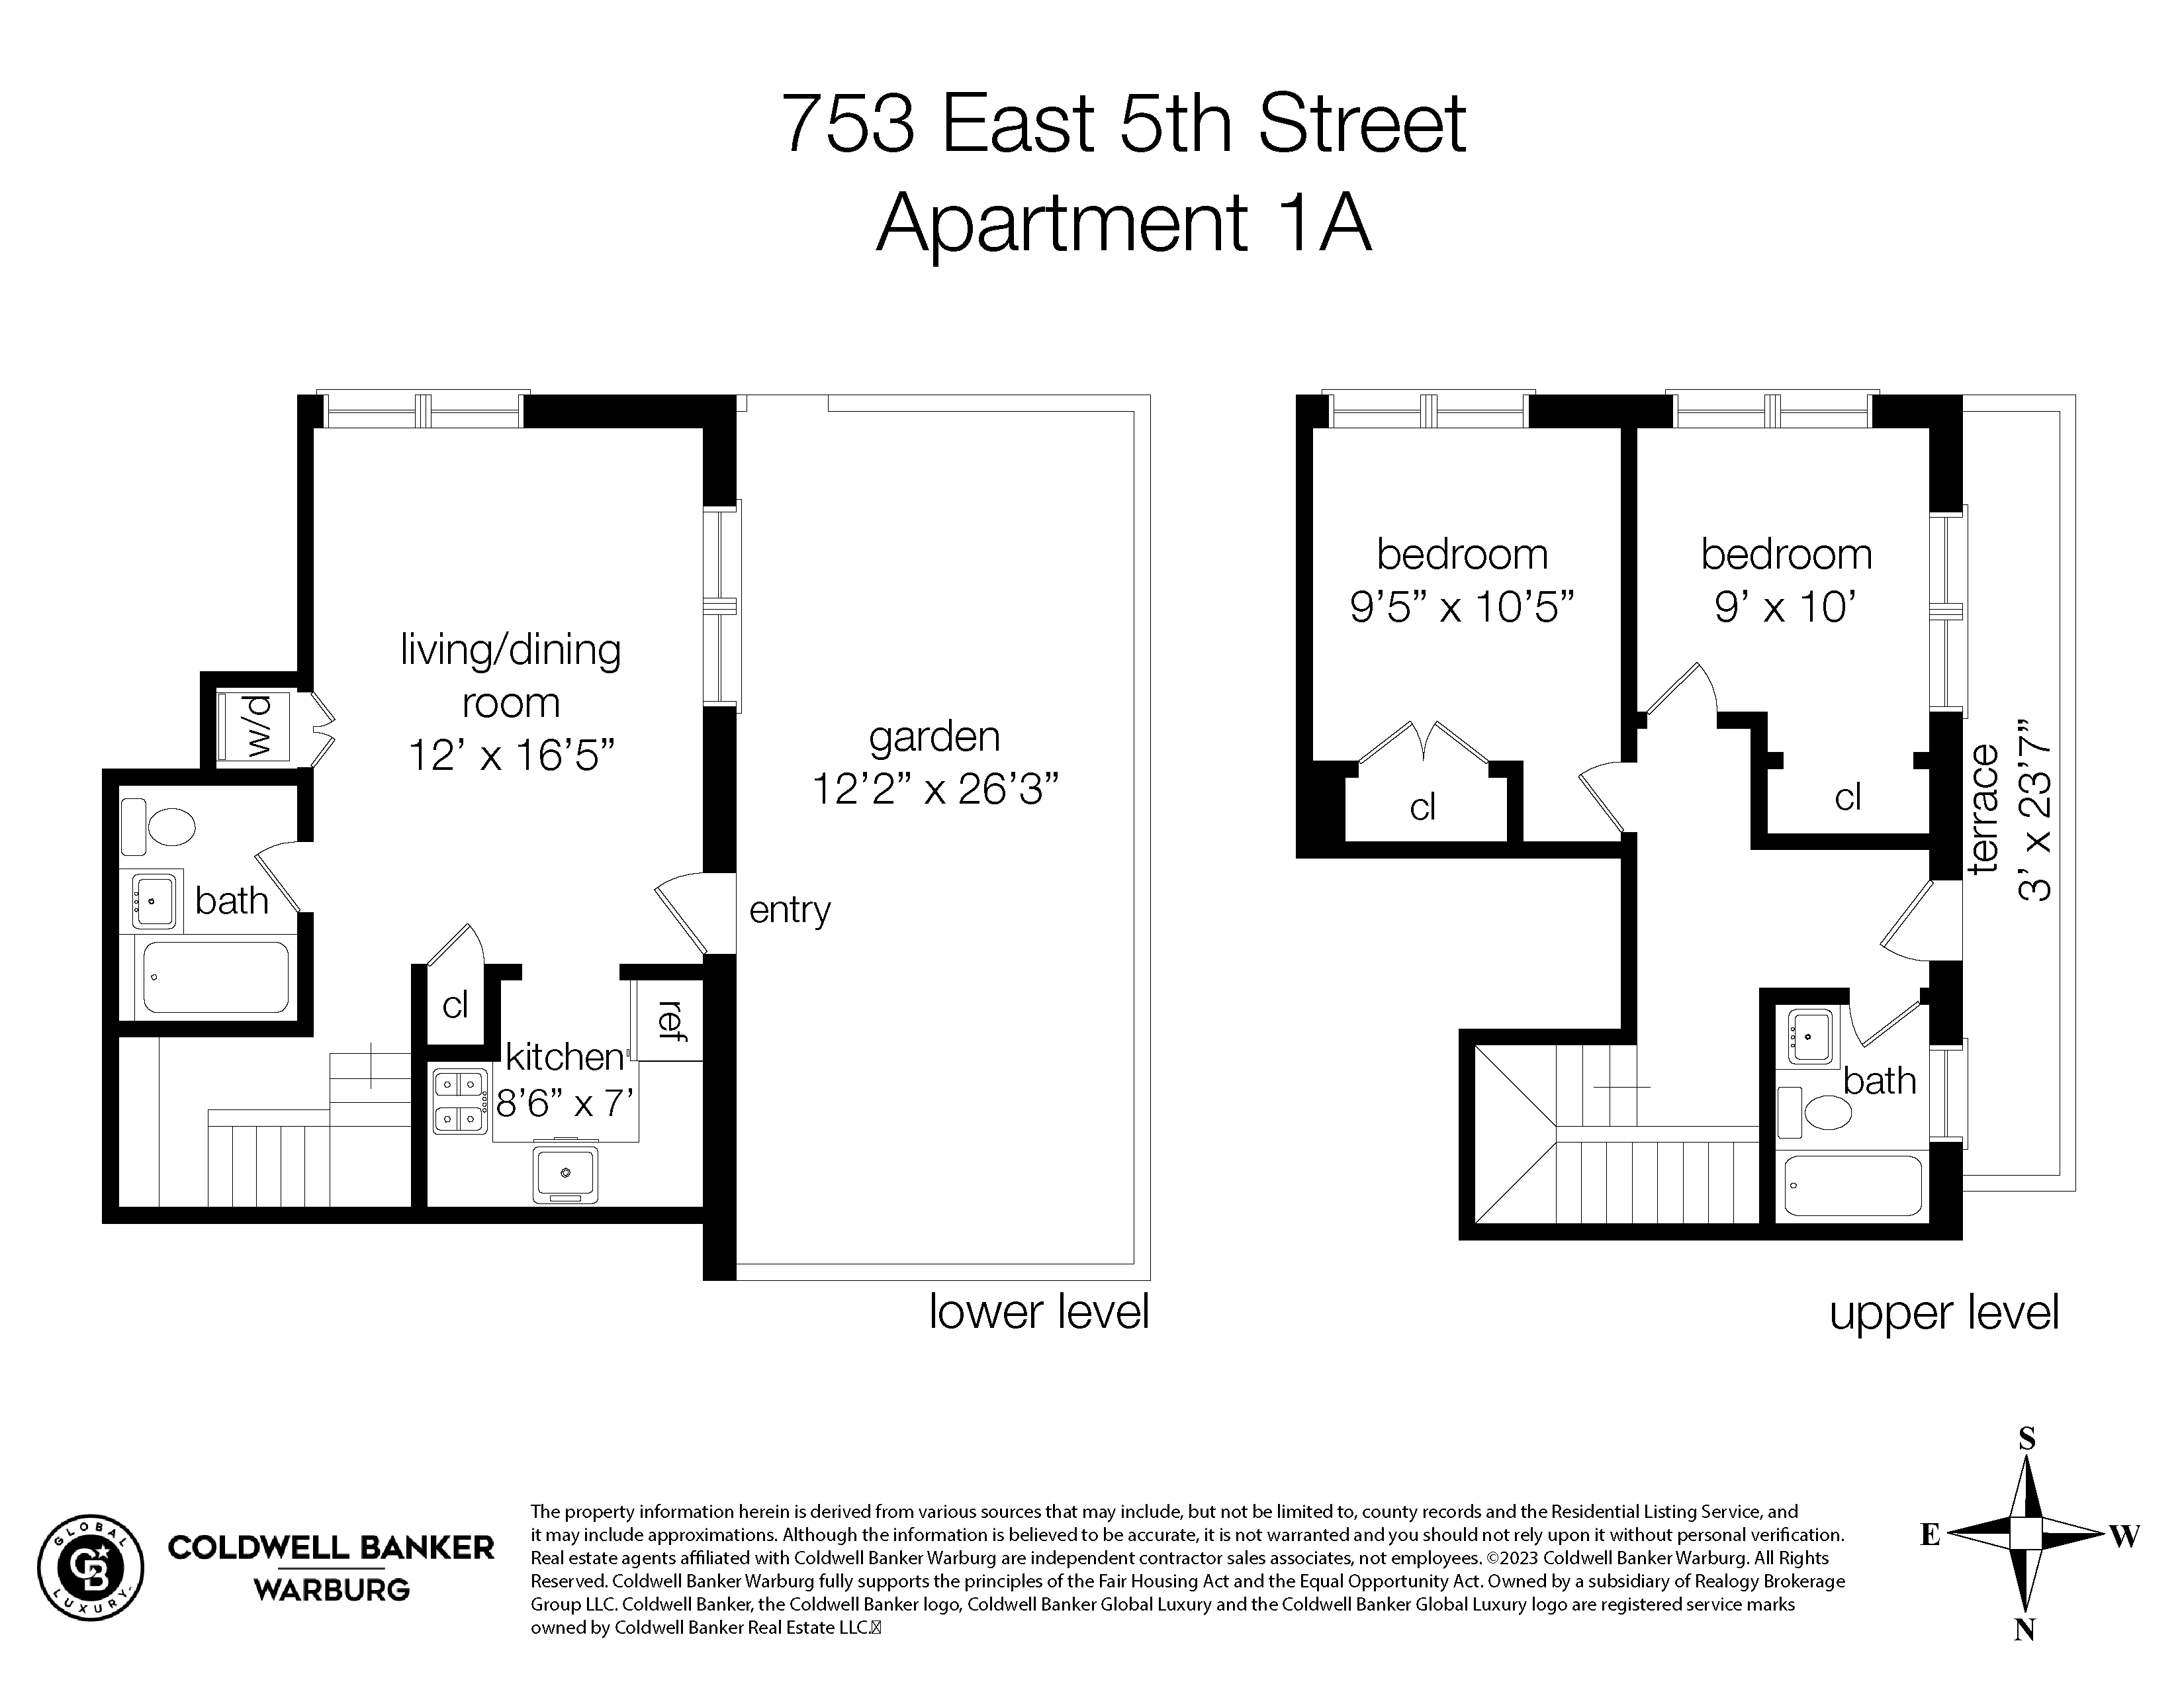 Floorplan for 753 East 5th Street, 1A